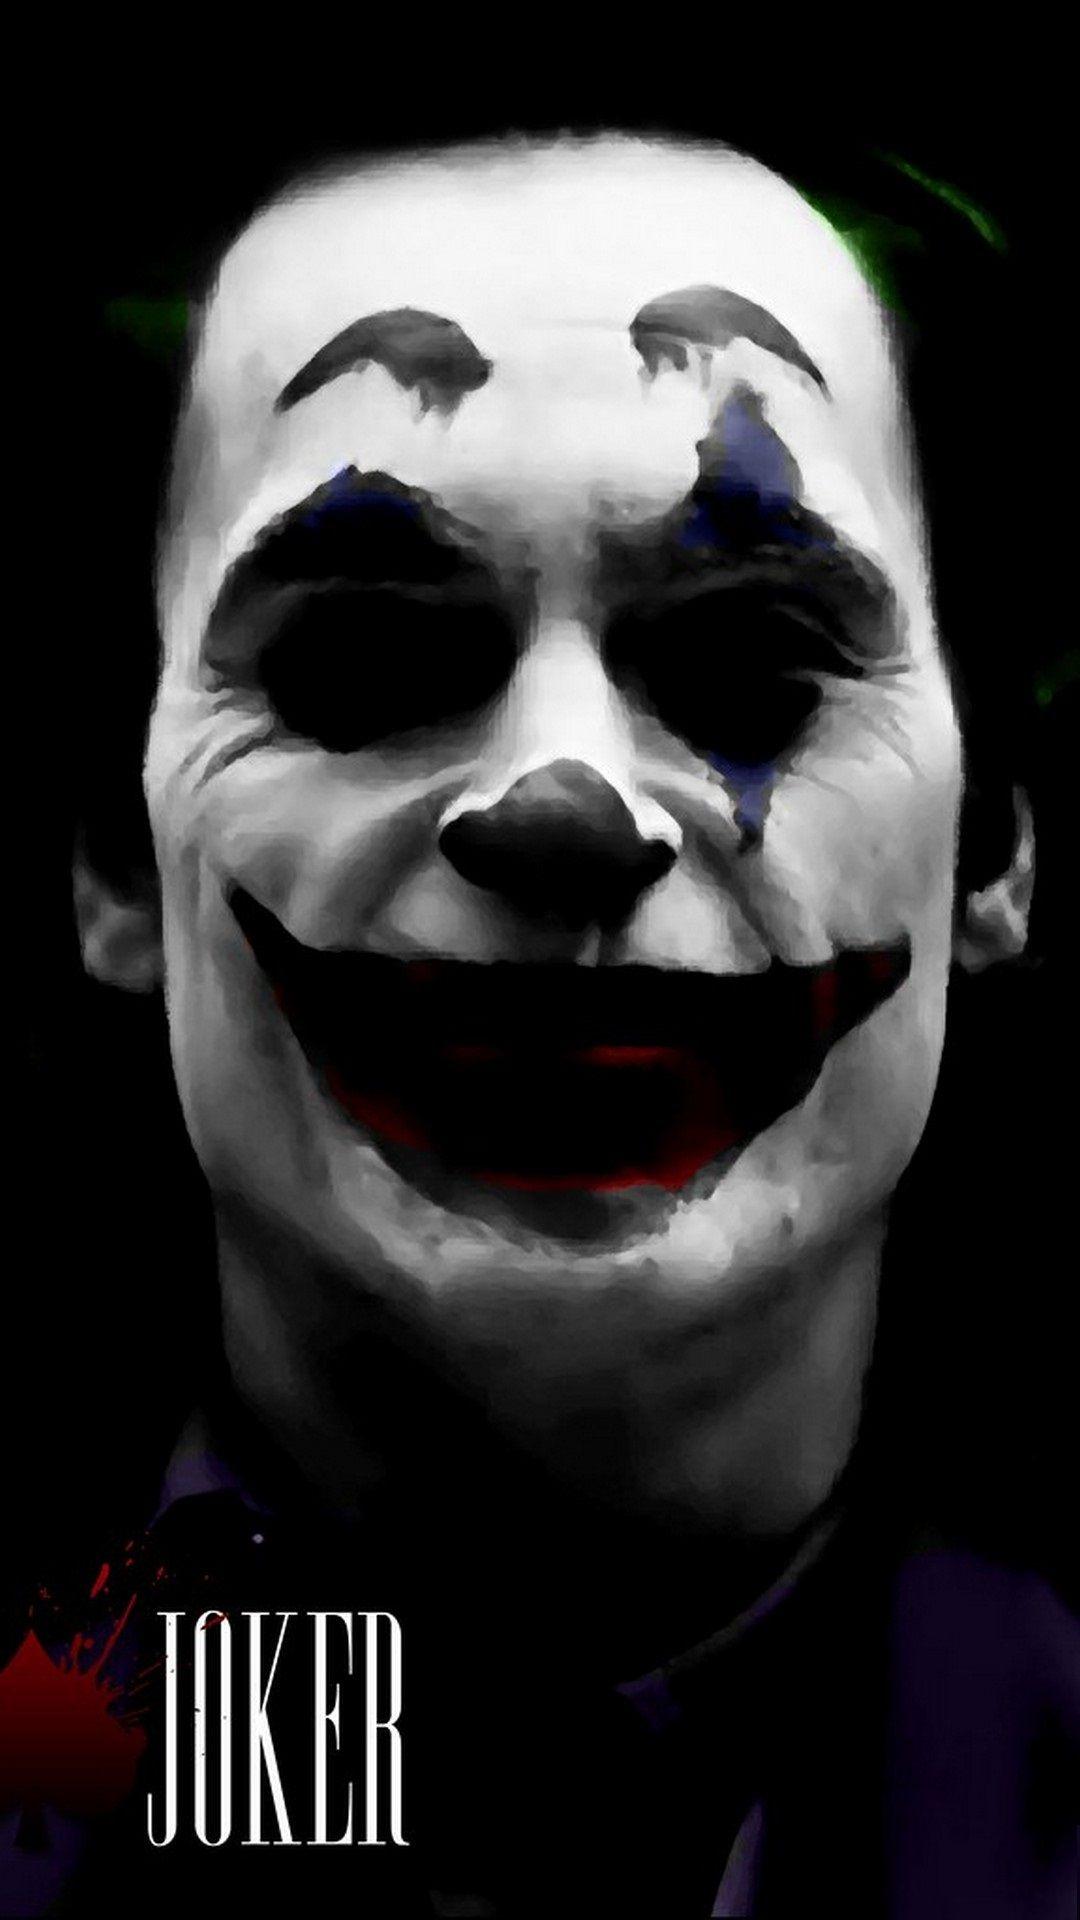 Joker 2019 Poster HD Movie Poster Wallpaper HD. Joker poster, Joker wallpaper, Joker pics